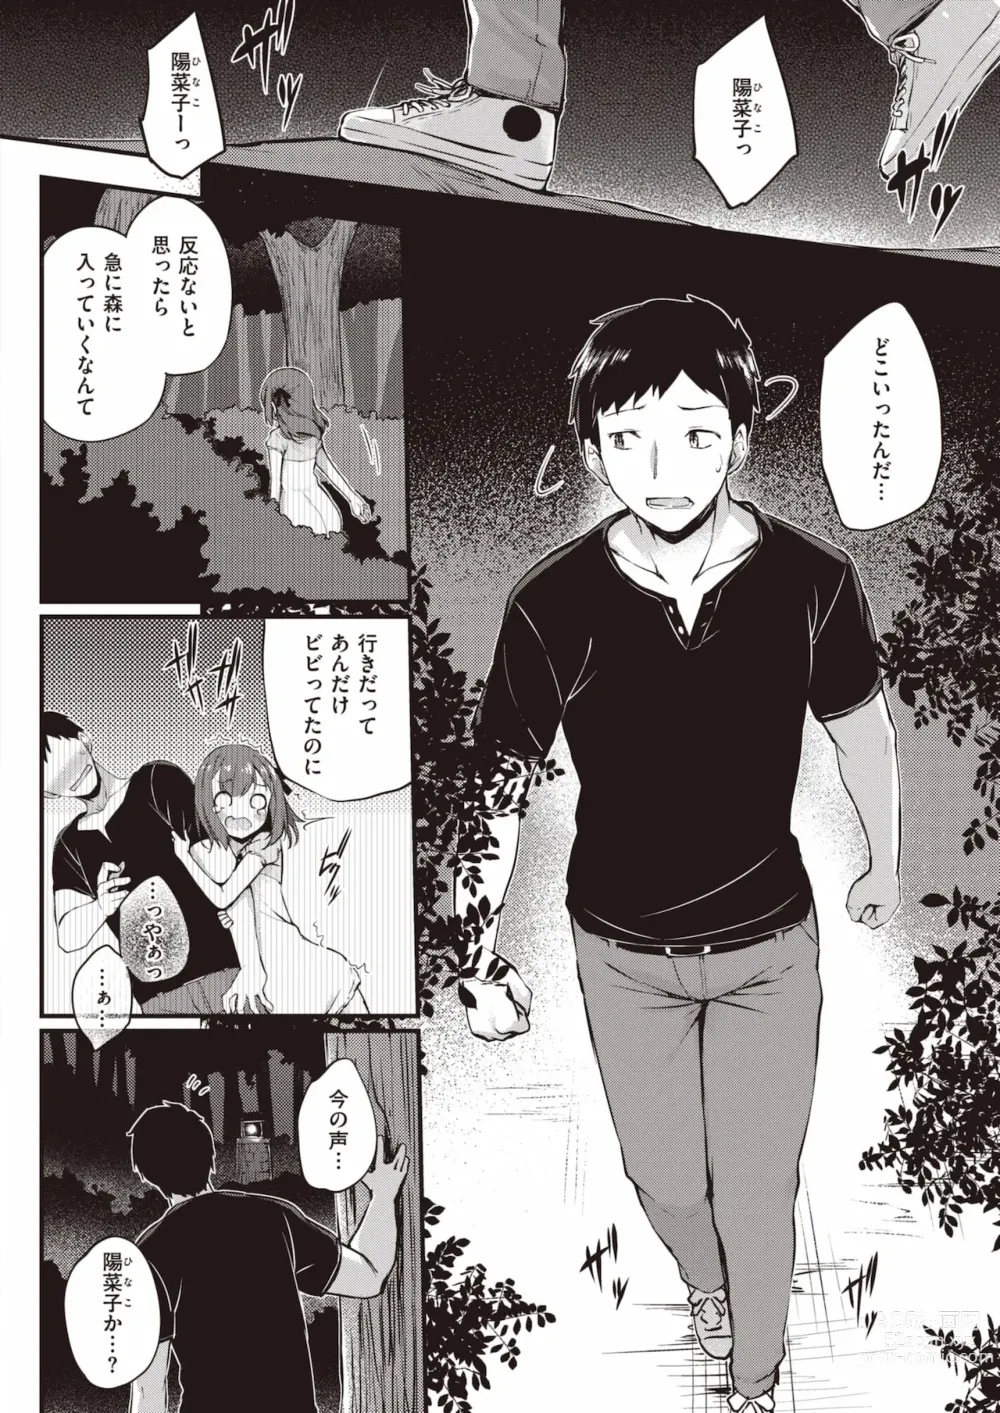 Page 6 of manga Atarashi Watashi